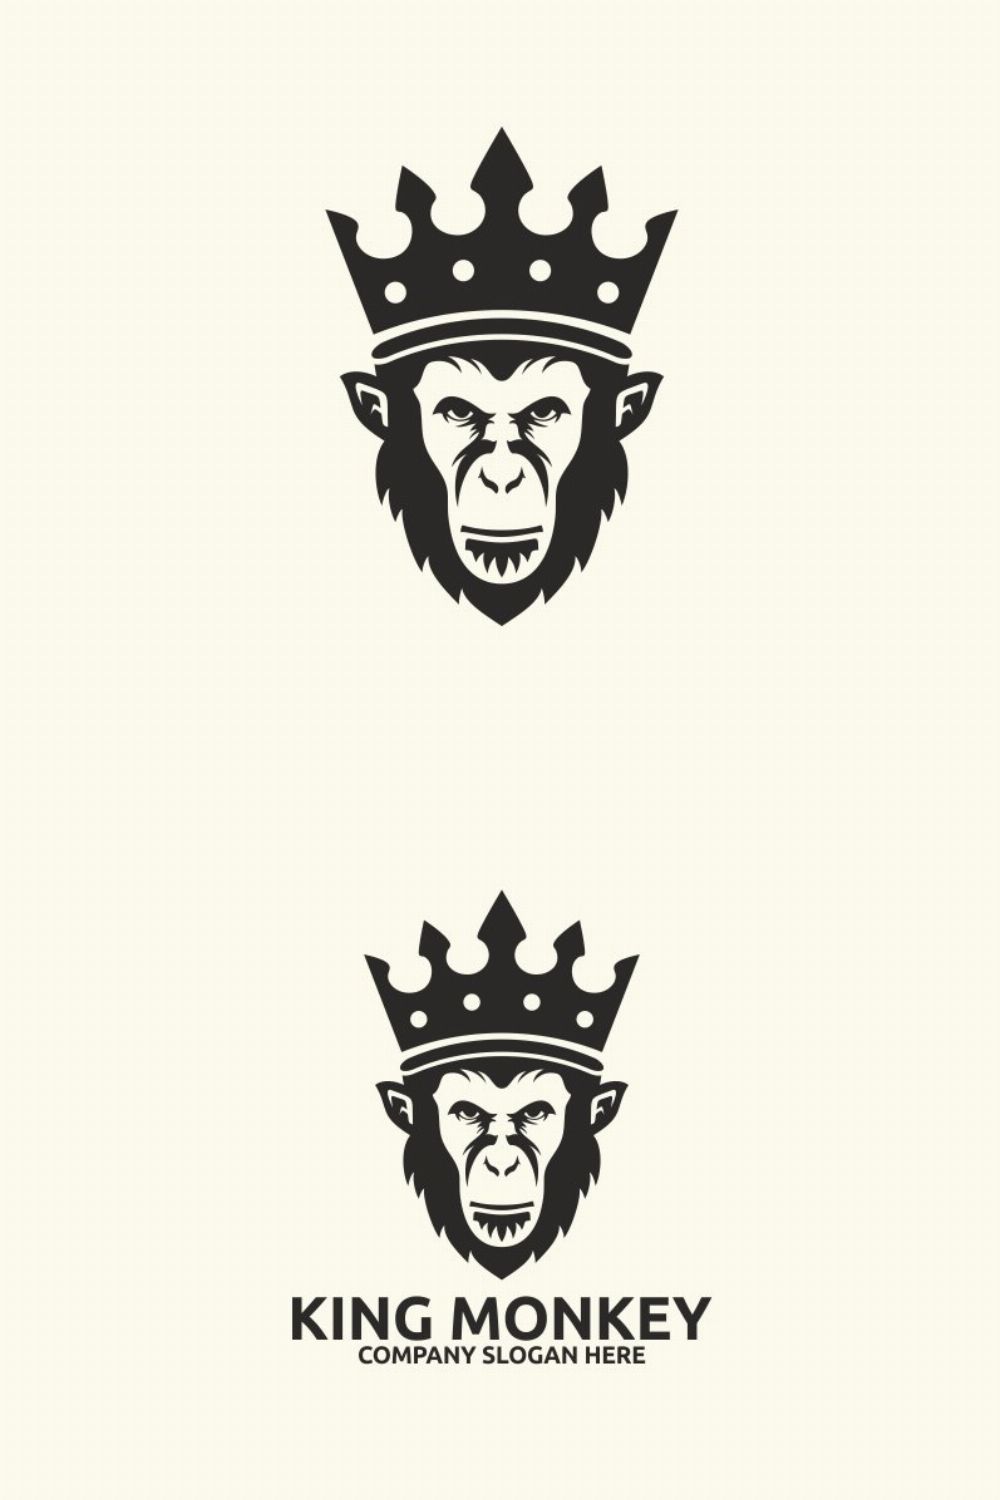 King Monkey pinterest preview image.